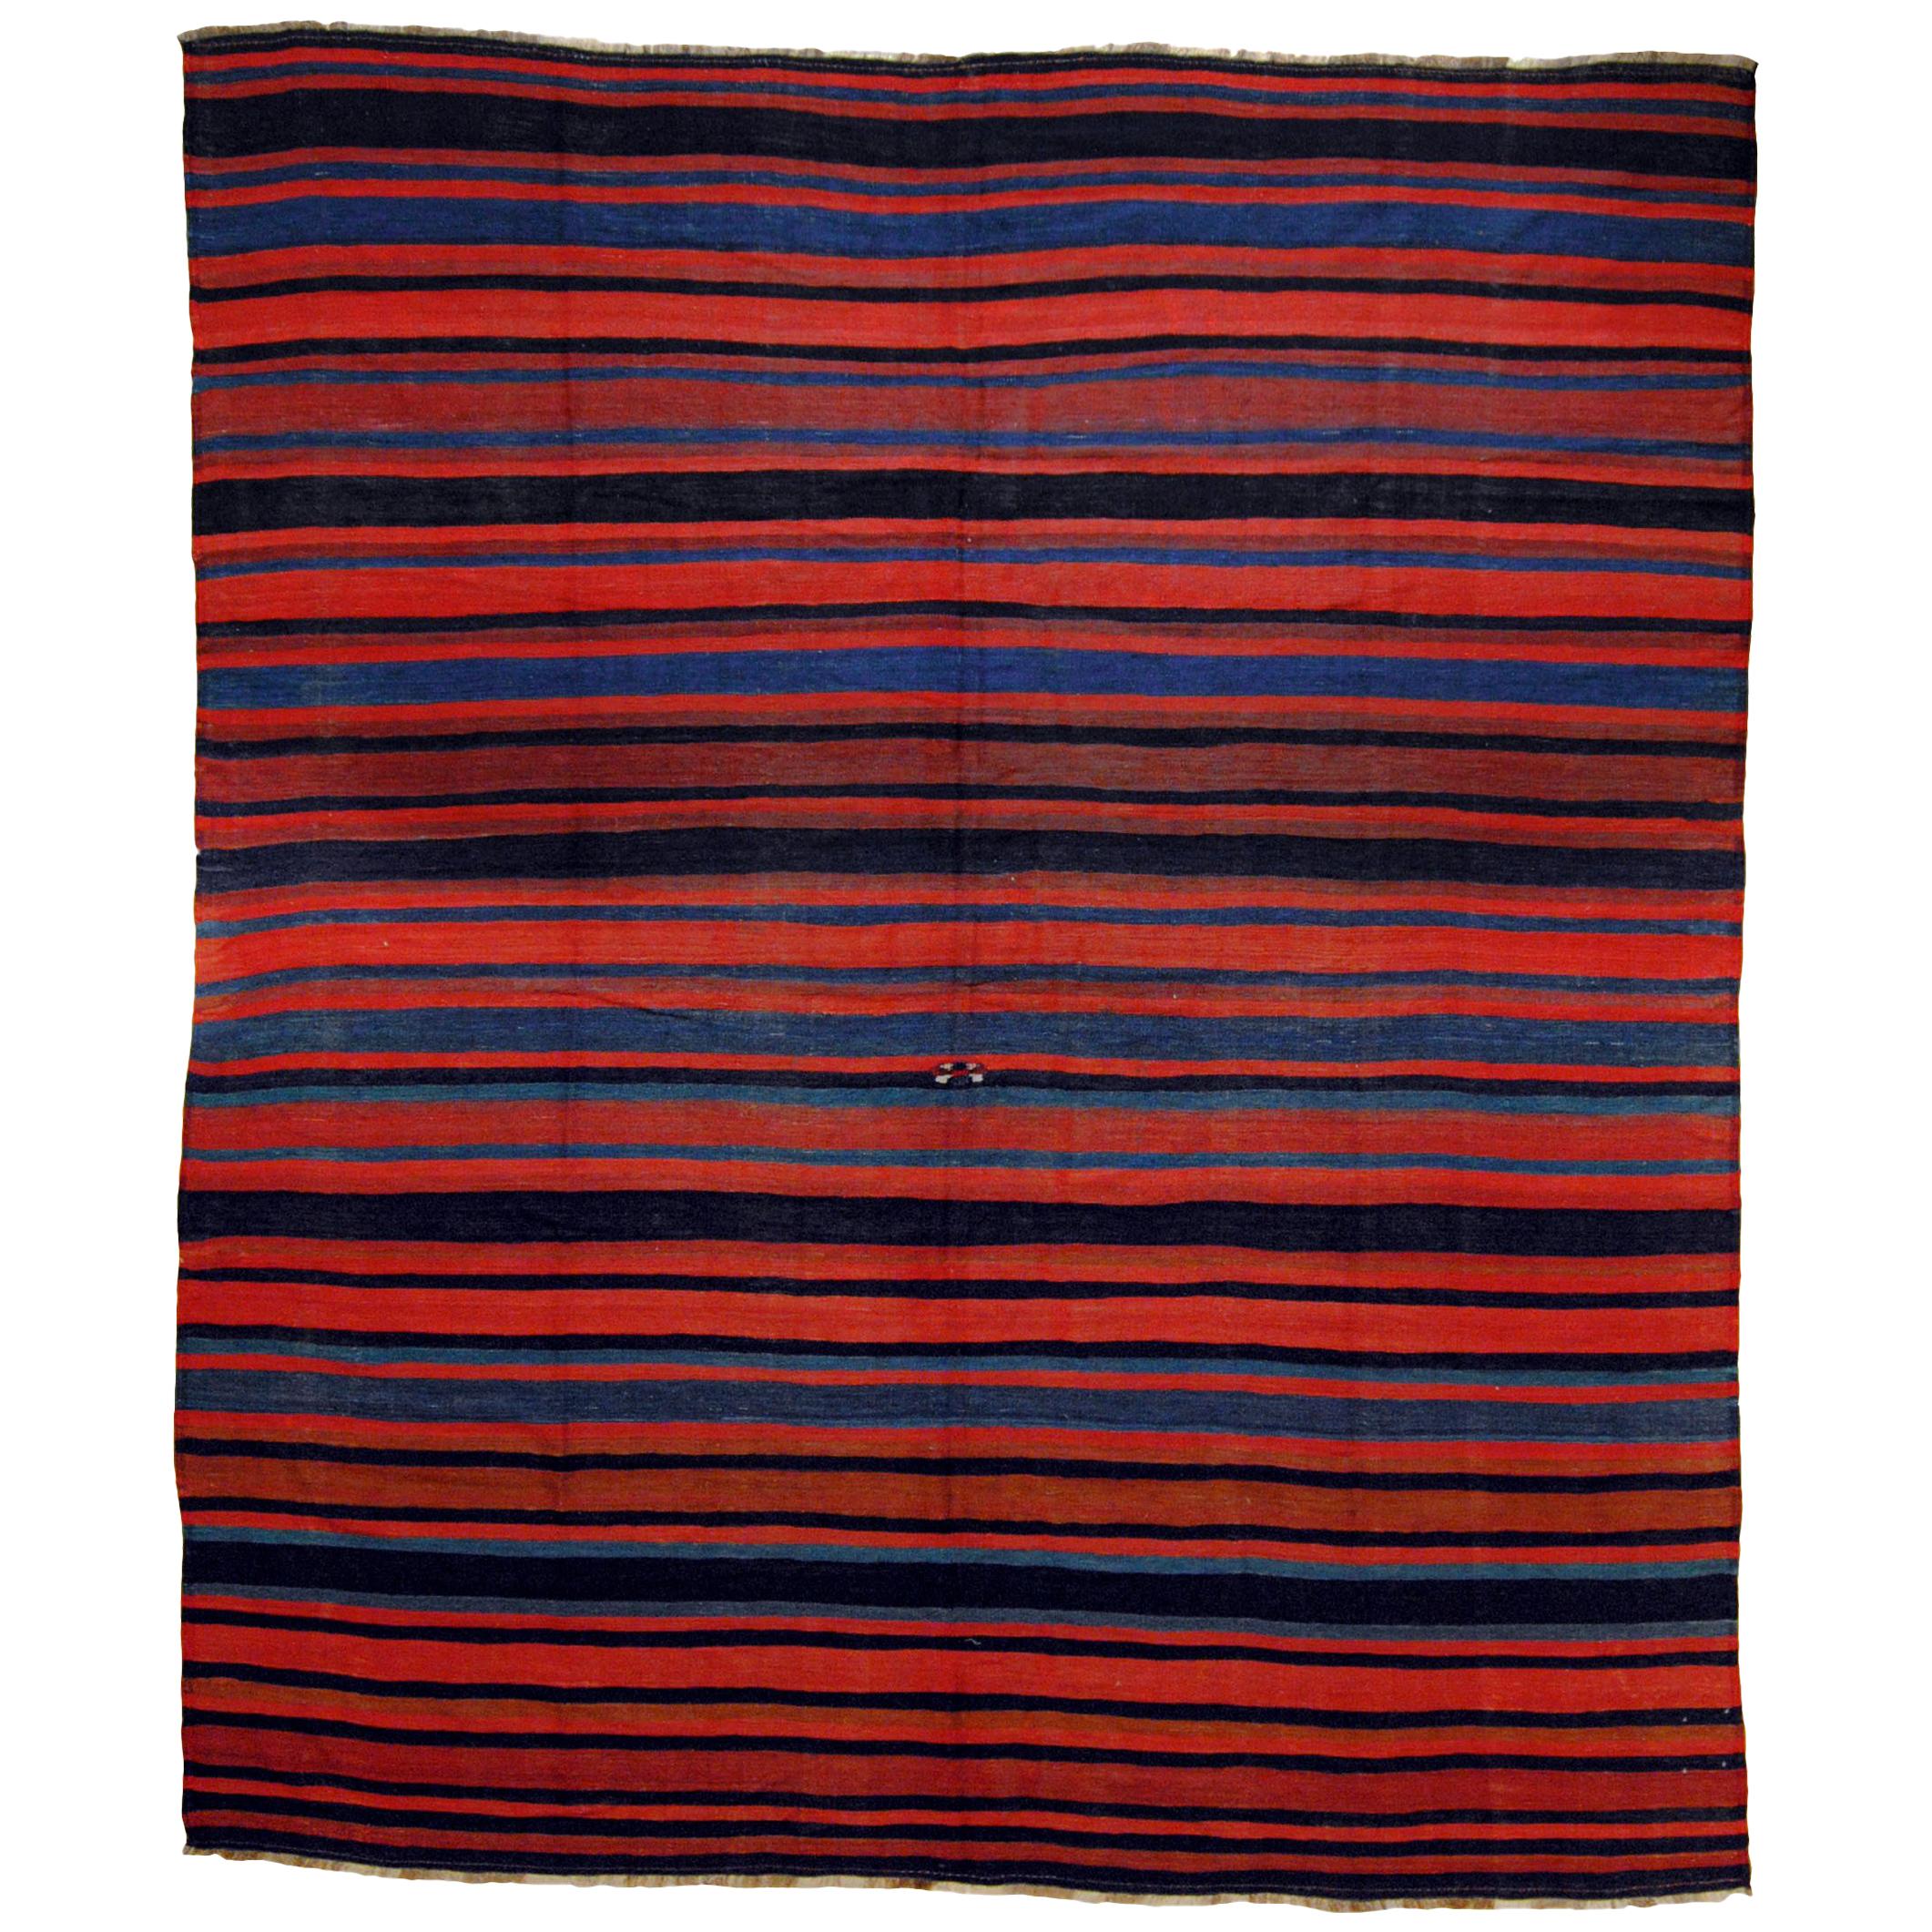 21st Century Red and Blue Nomadic Kurdish Stripes Kilim Rug in Wool, circa 1900s